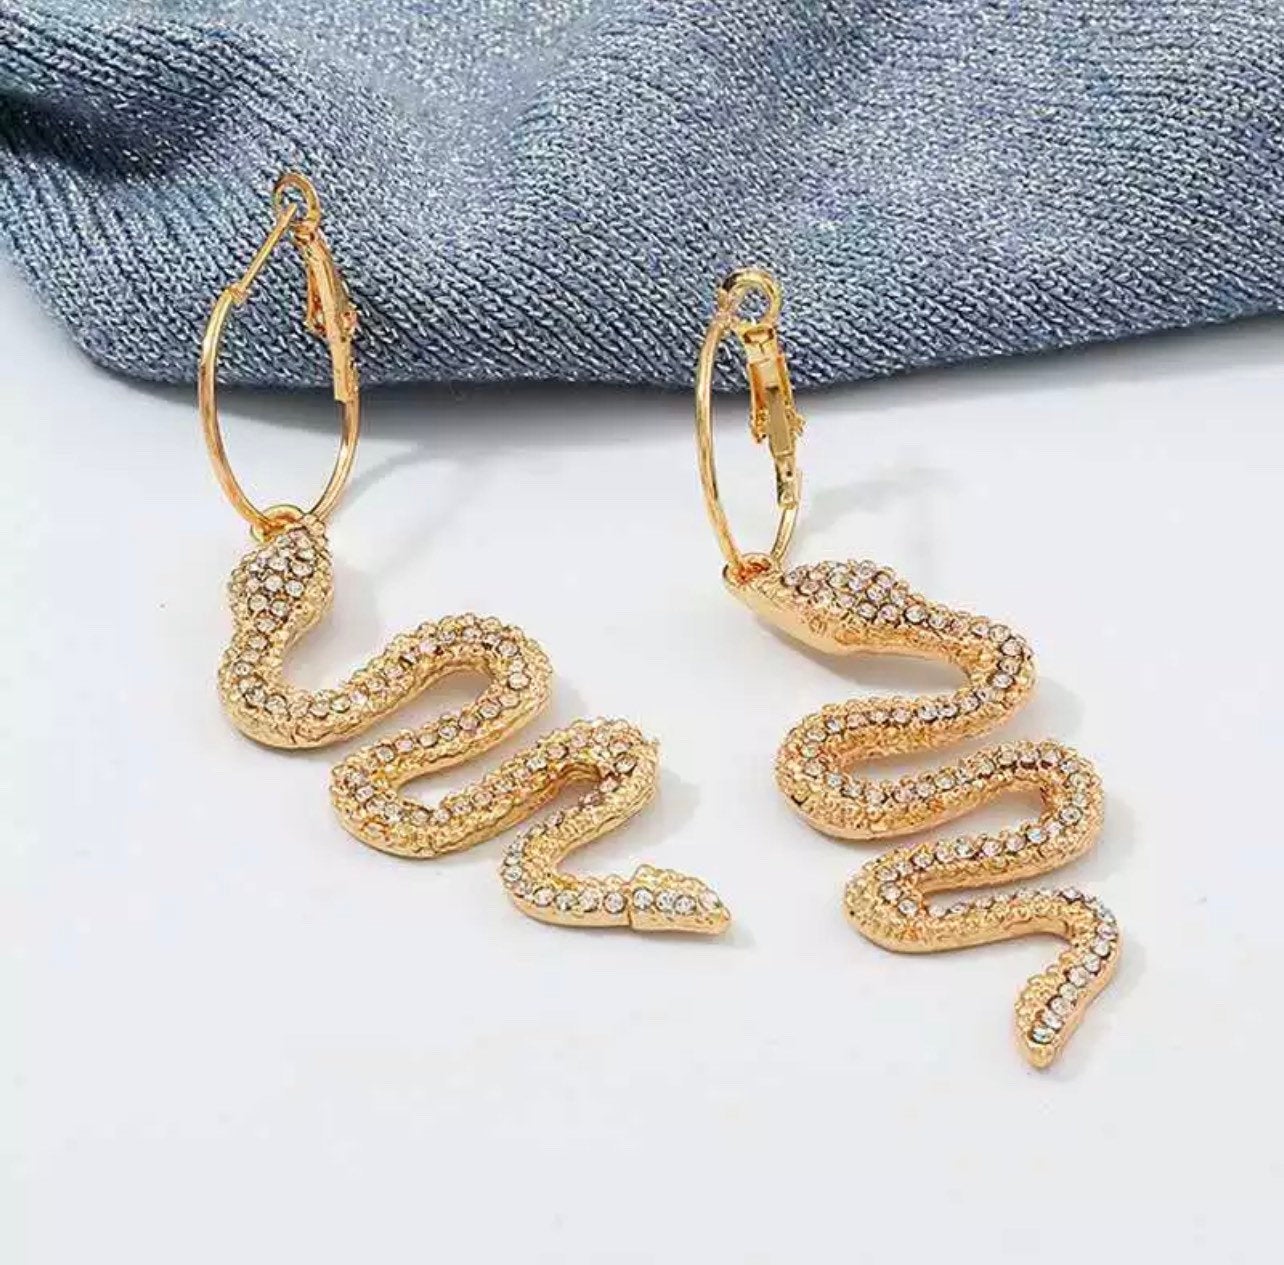 Vintage Dragon Snake Earrings